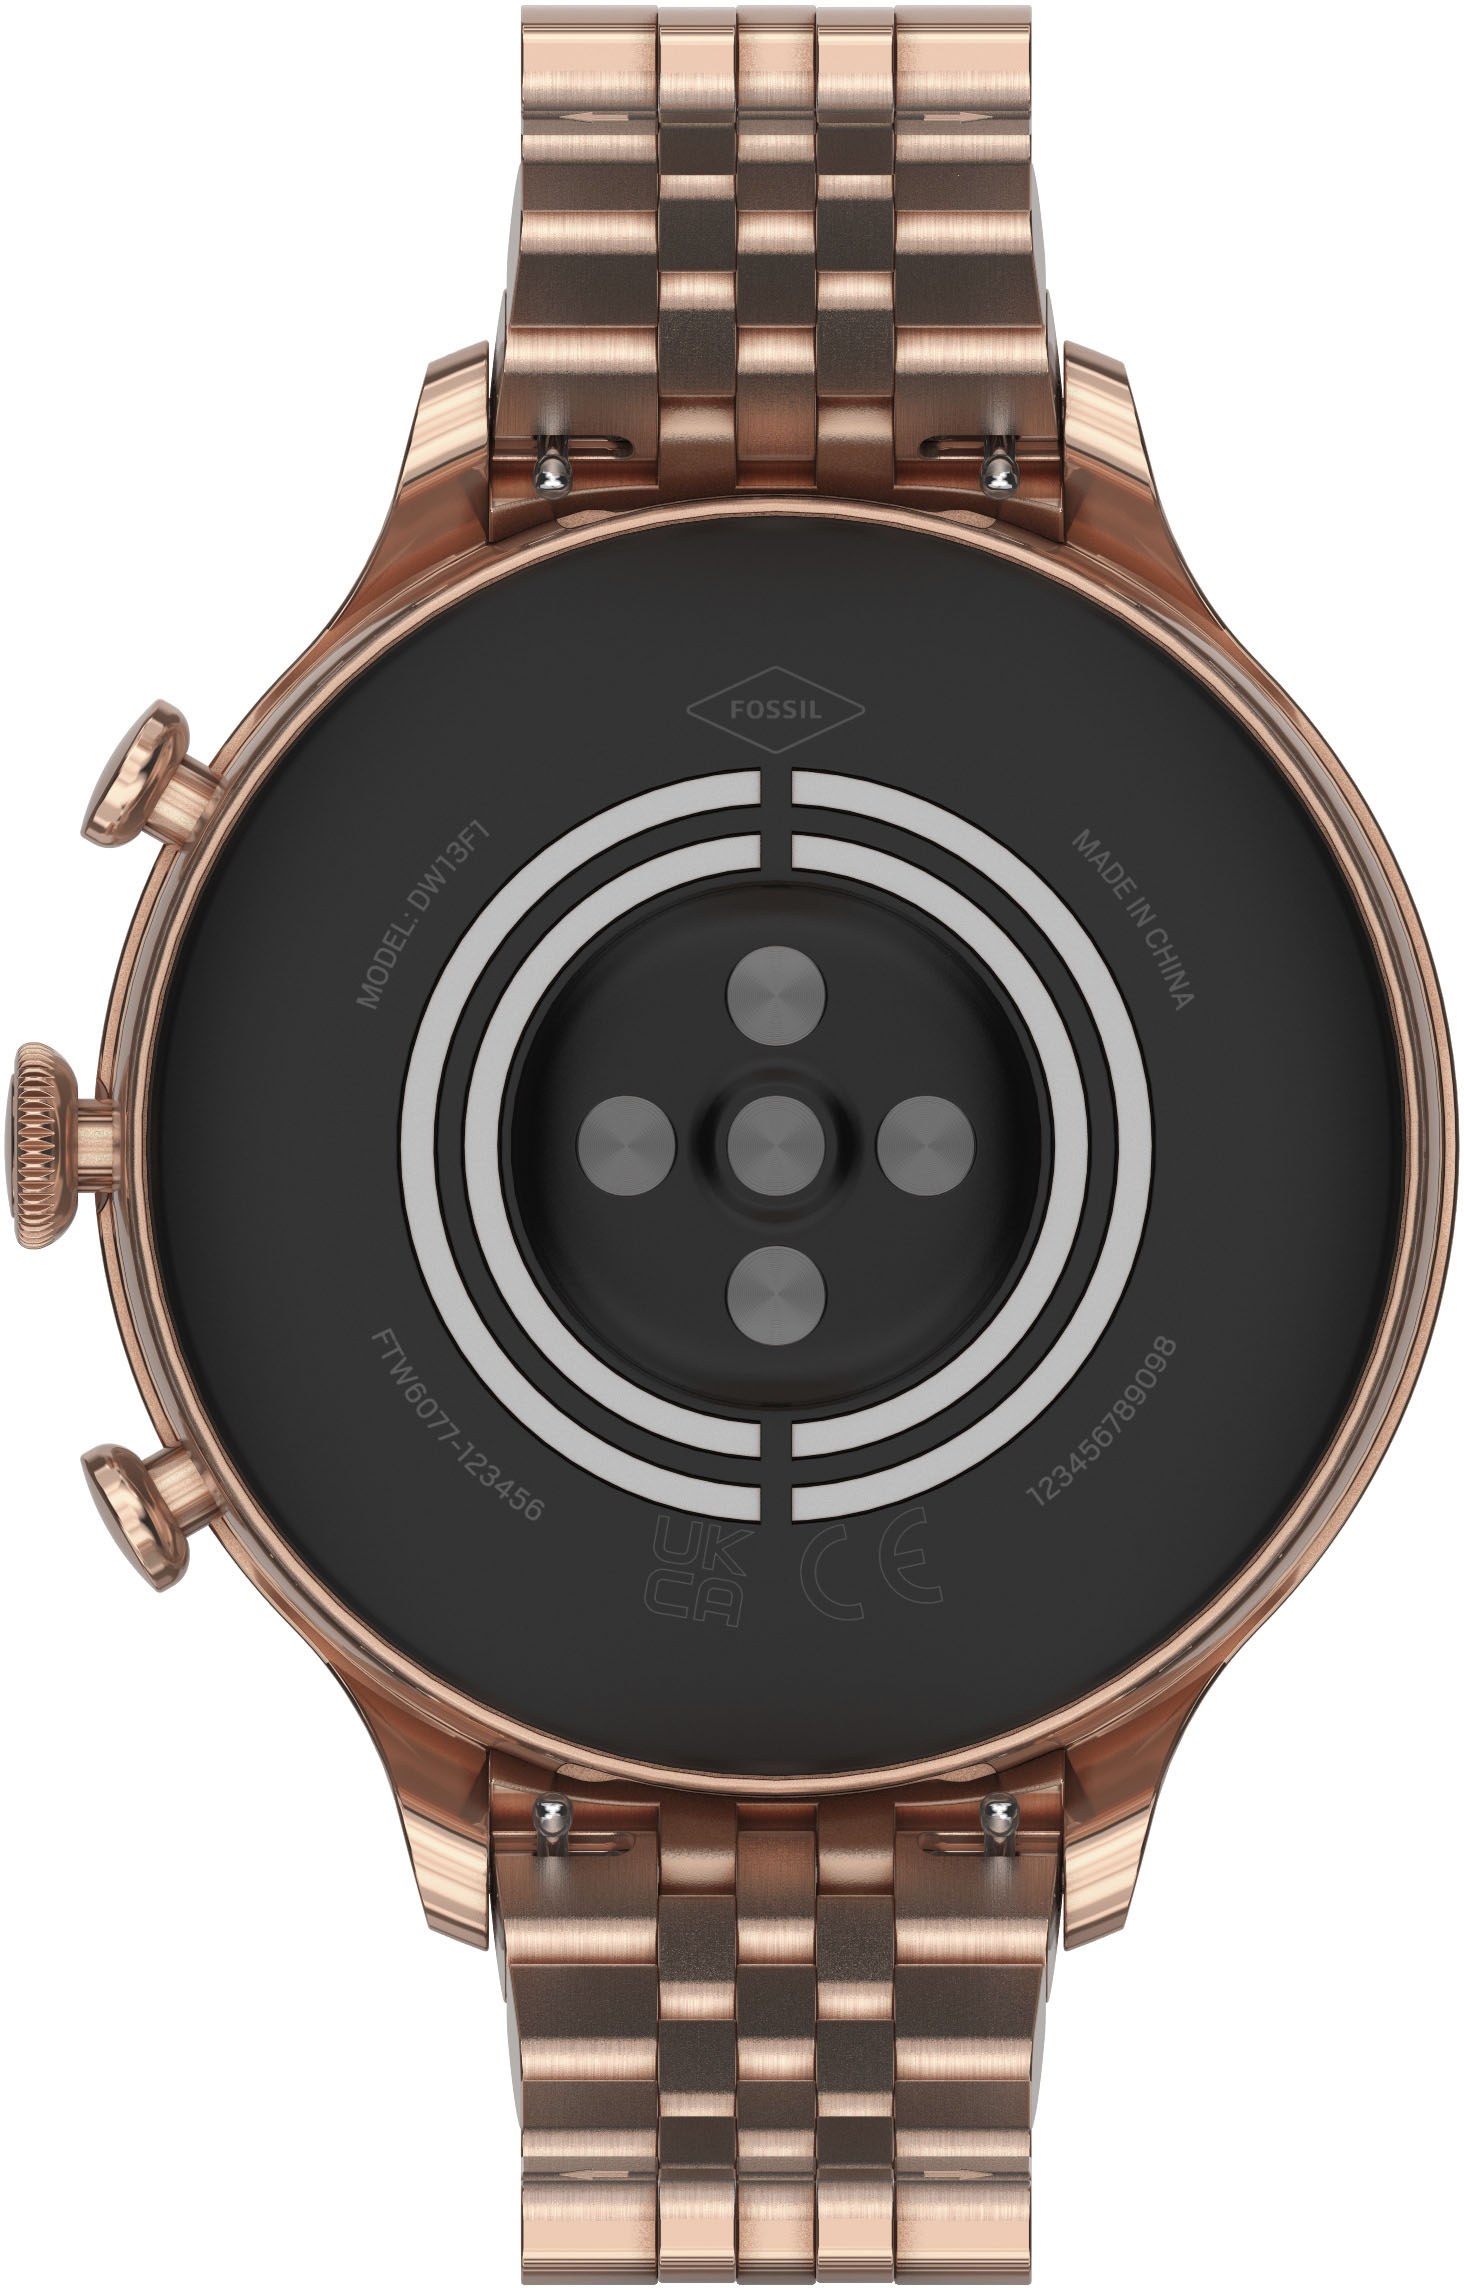 Back View: Fossil - Hybrid HR Smartwatch 42mm - Black